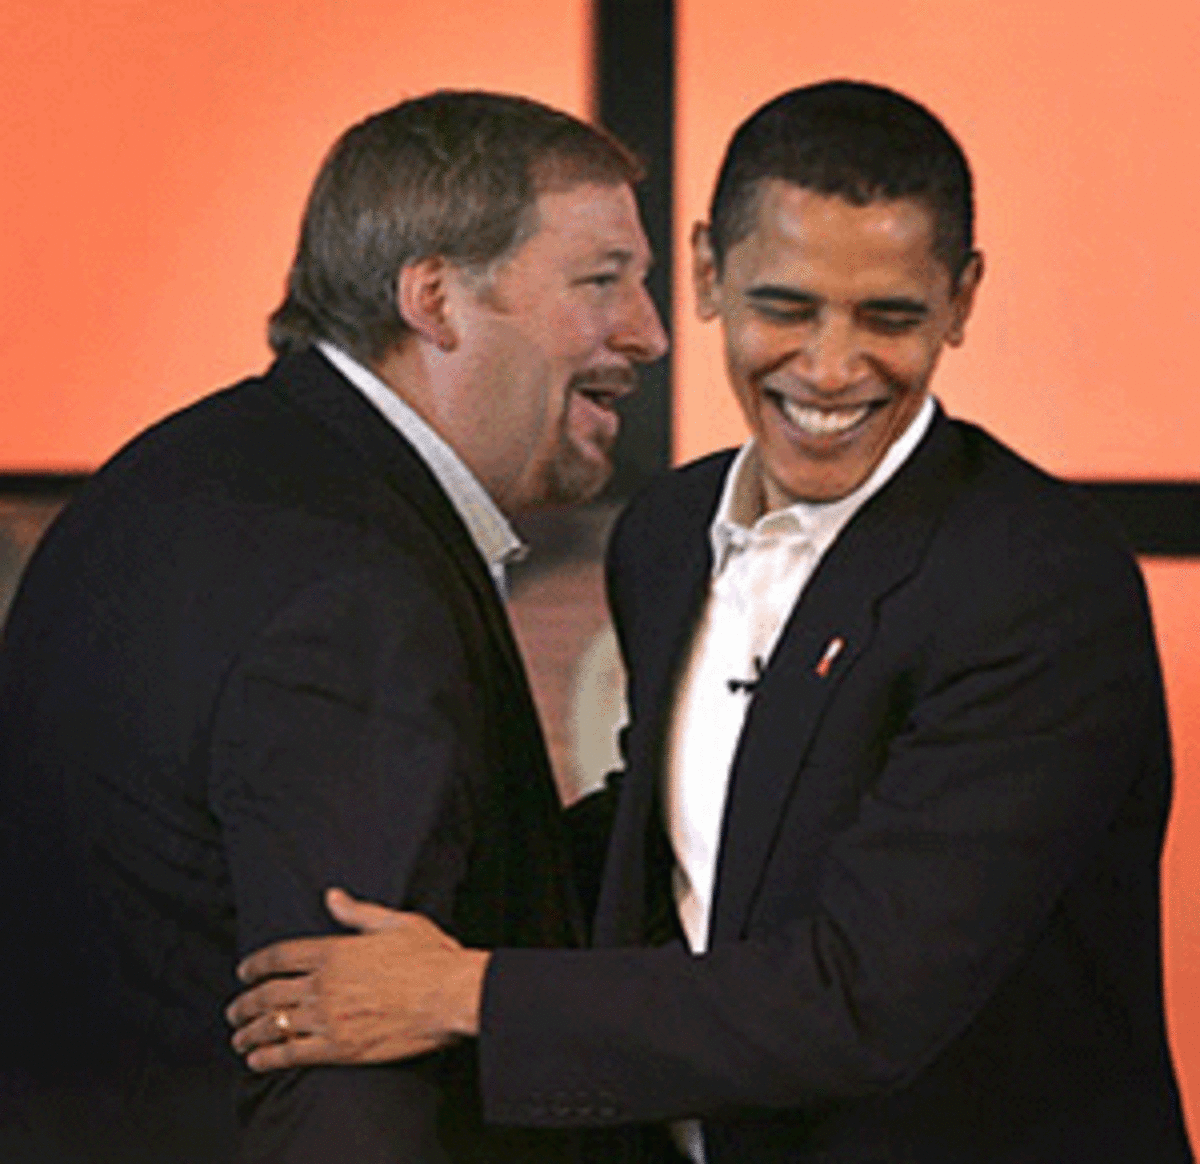 Rick Warren and Barack Obama